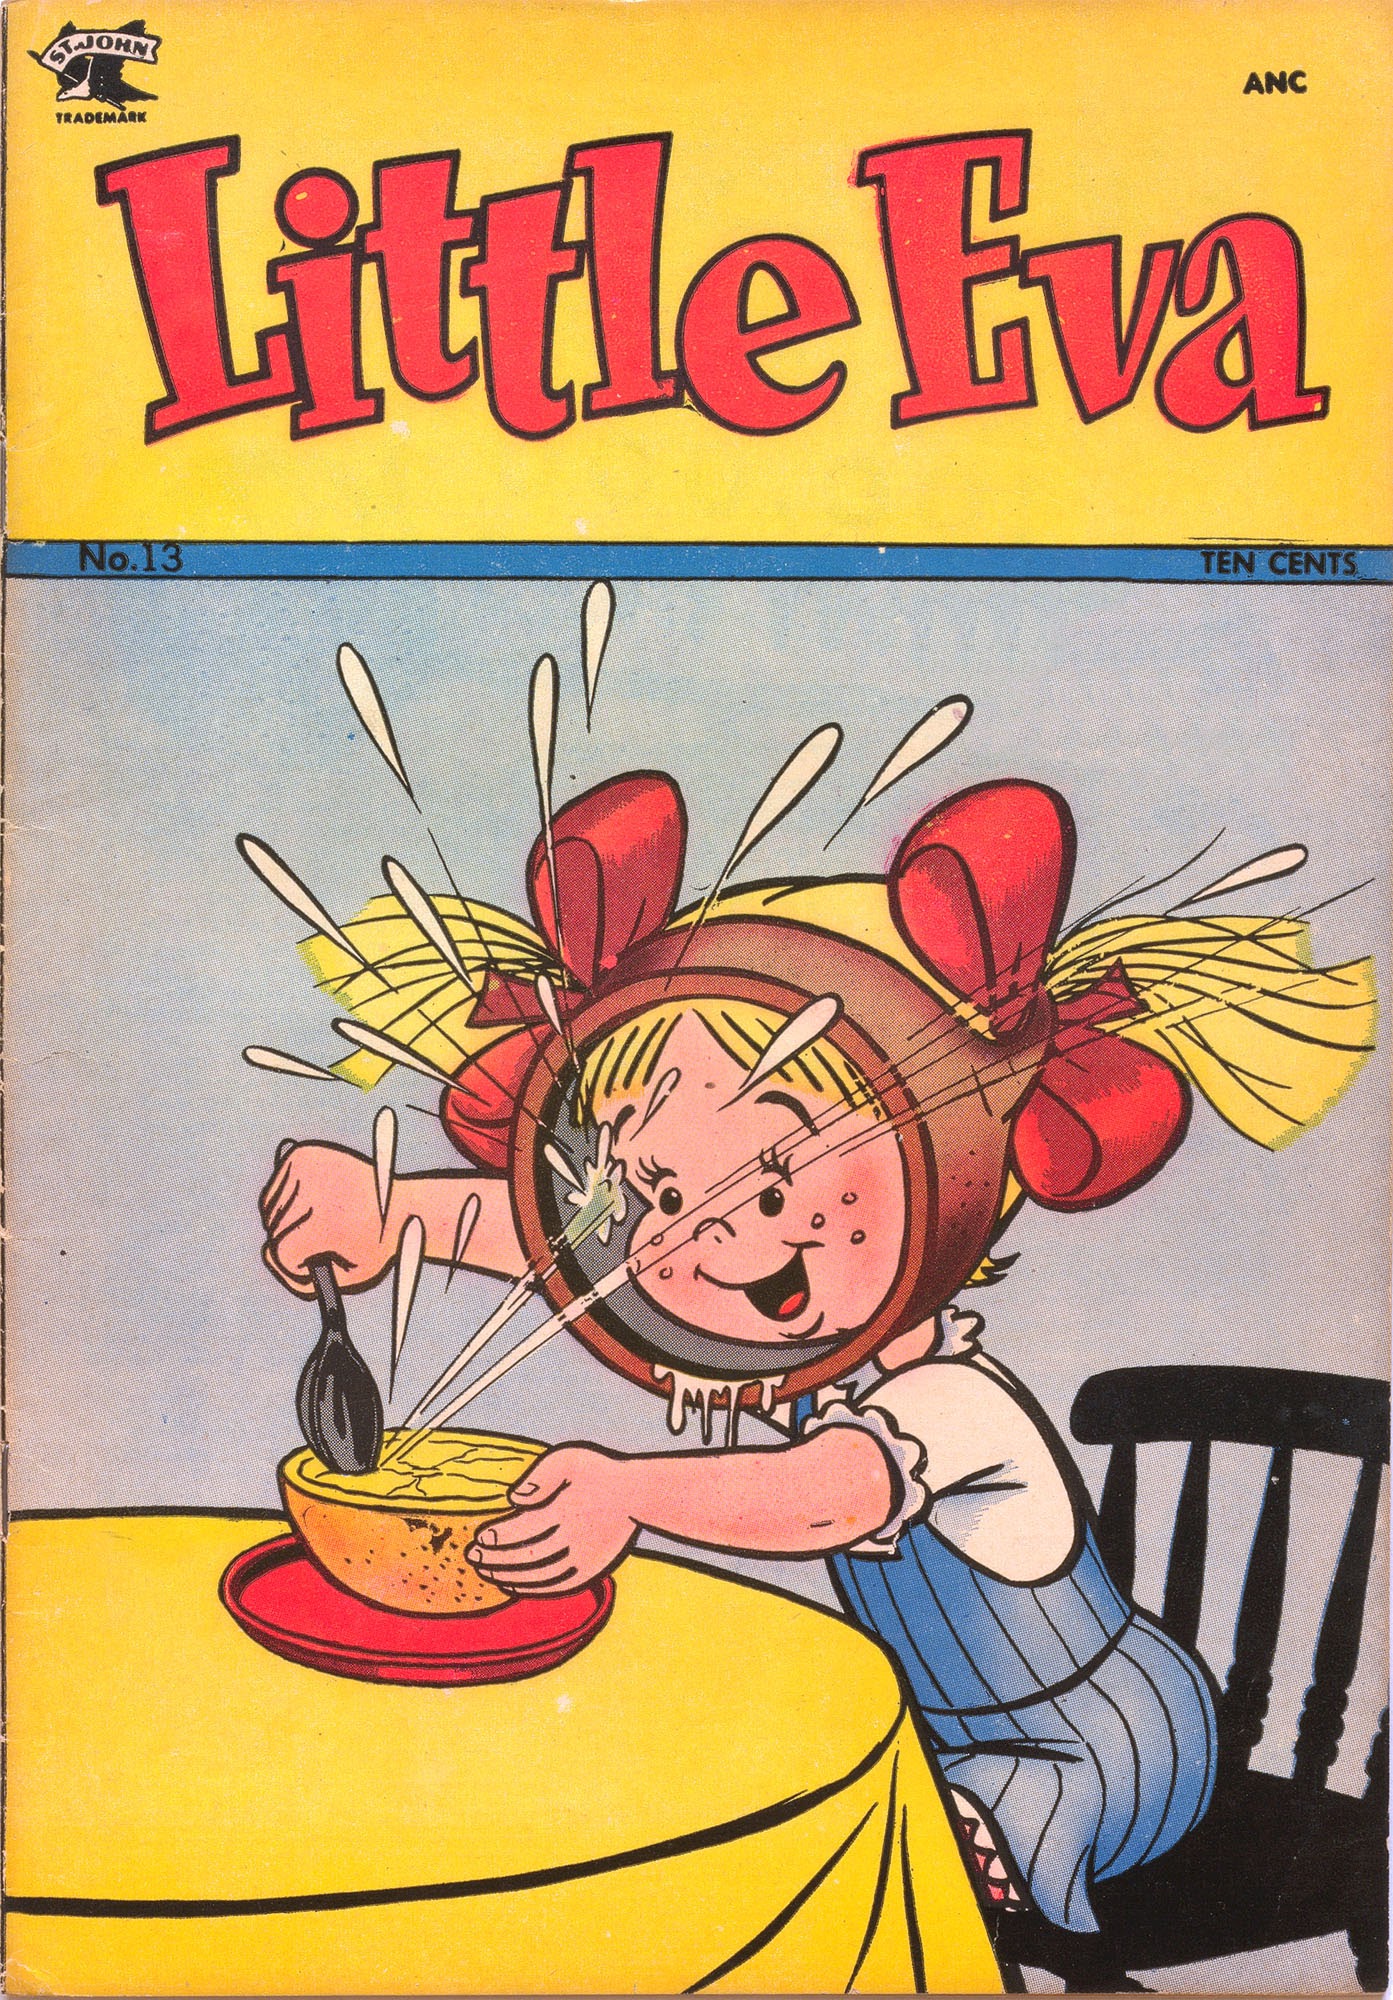 Little Eva Issue 13 | Read Little Eva Issue 13 comic online in high  quality. Read Full Comic online for free - Read comics online in high  quality .|